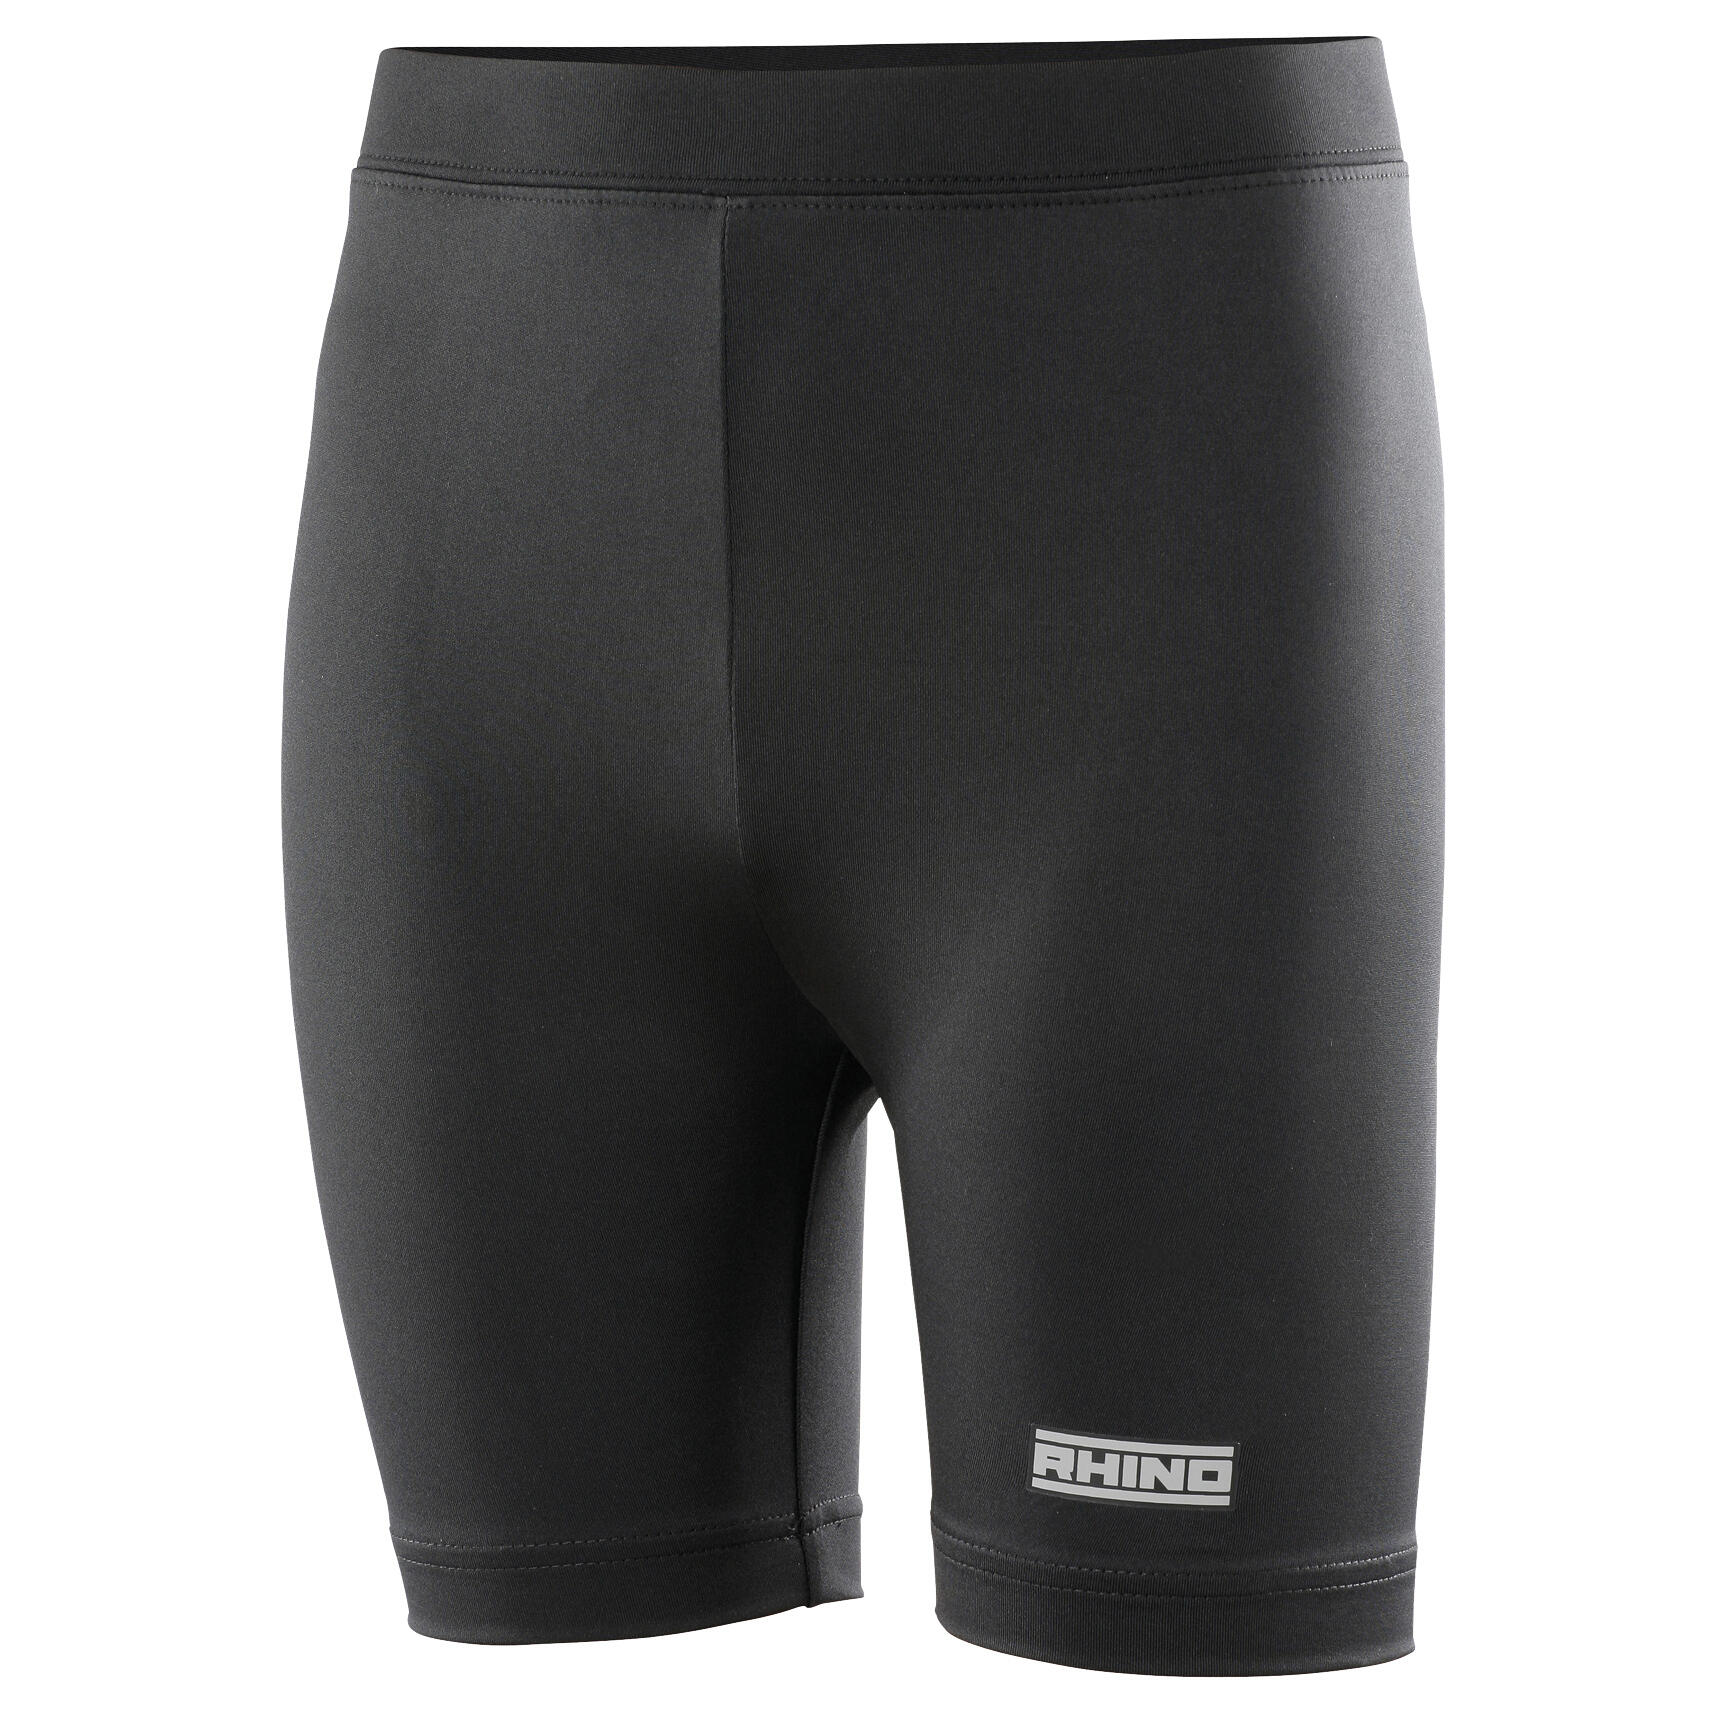 RHINO Childrens Boys Thermal Underwear Sports Base Layer Shorts (Black)